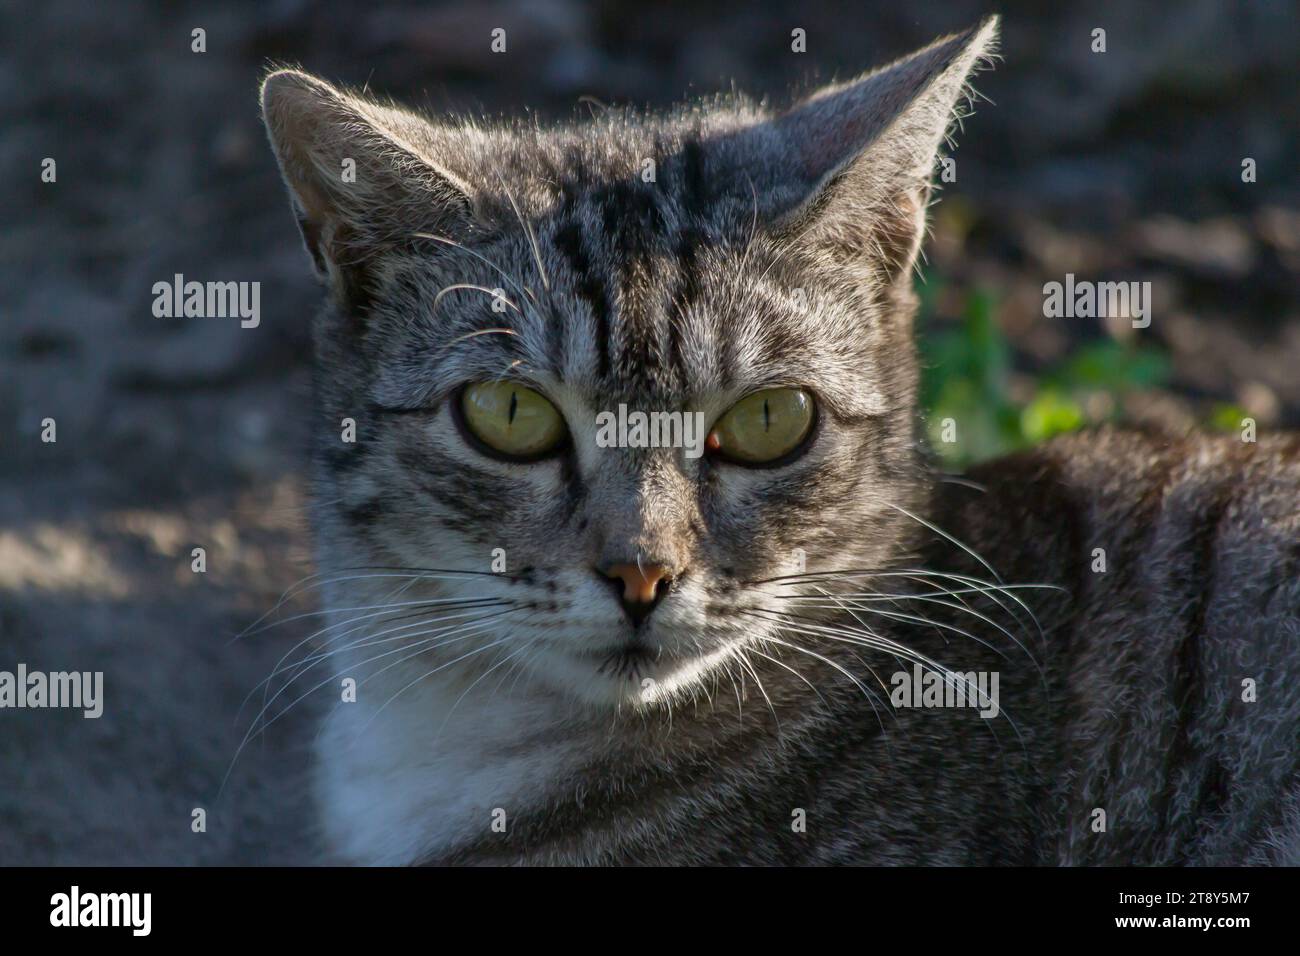 Tabby cat muzzle close-up photo. Stock Photo